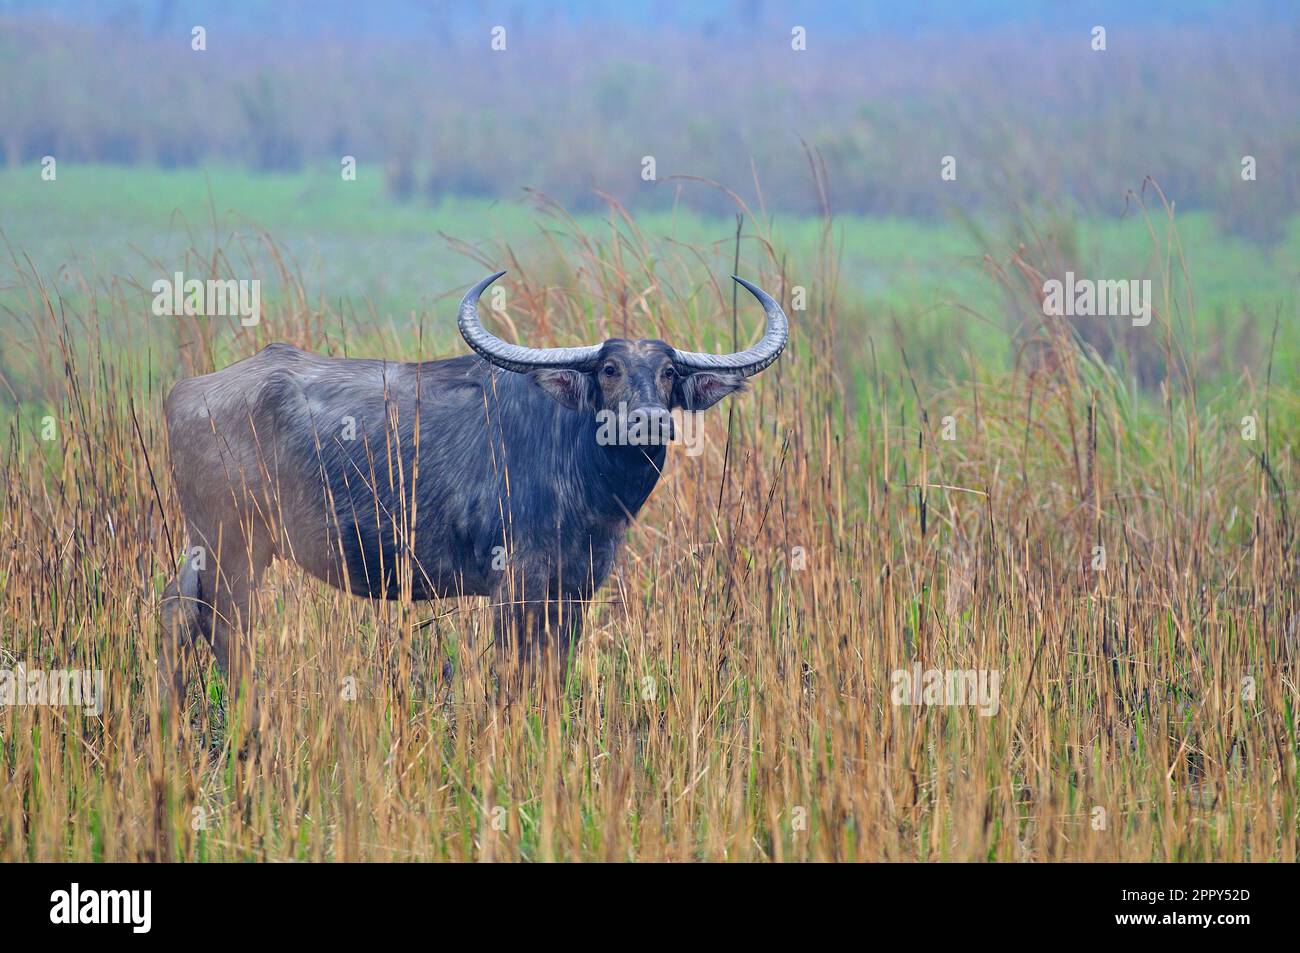 Asiatic Wild Buffalo looking from grass towards camera in Kaziranga National Park, India Stock Photo